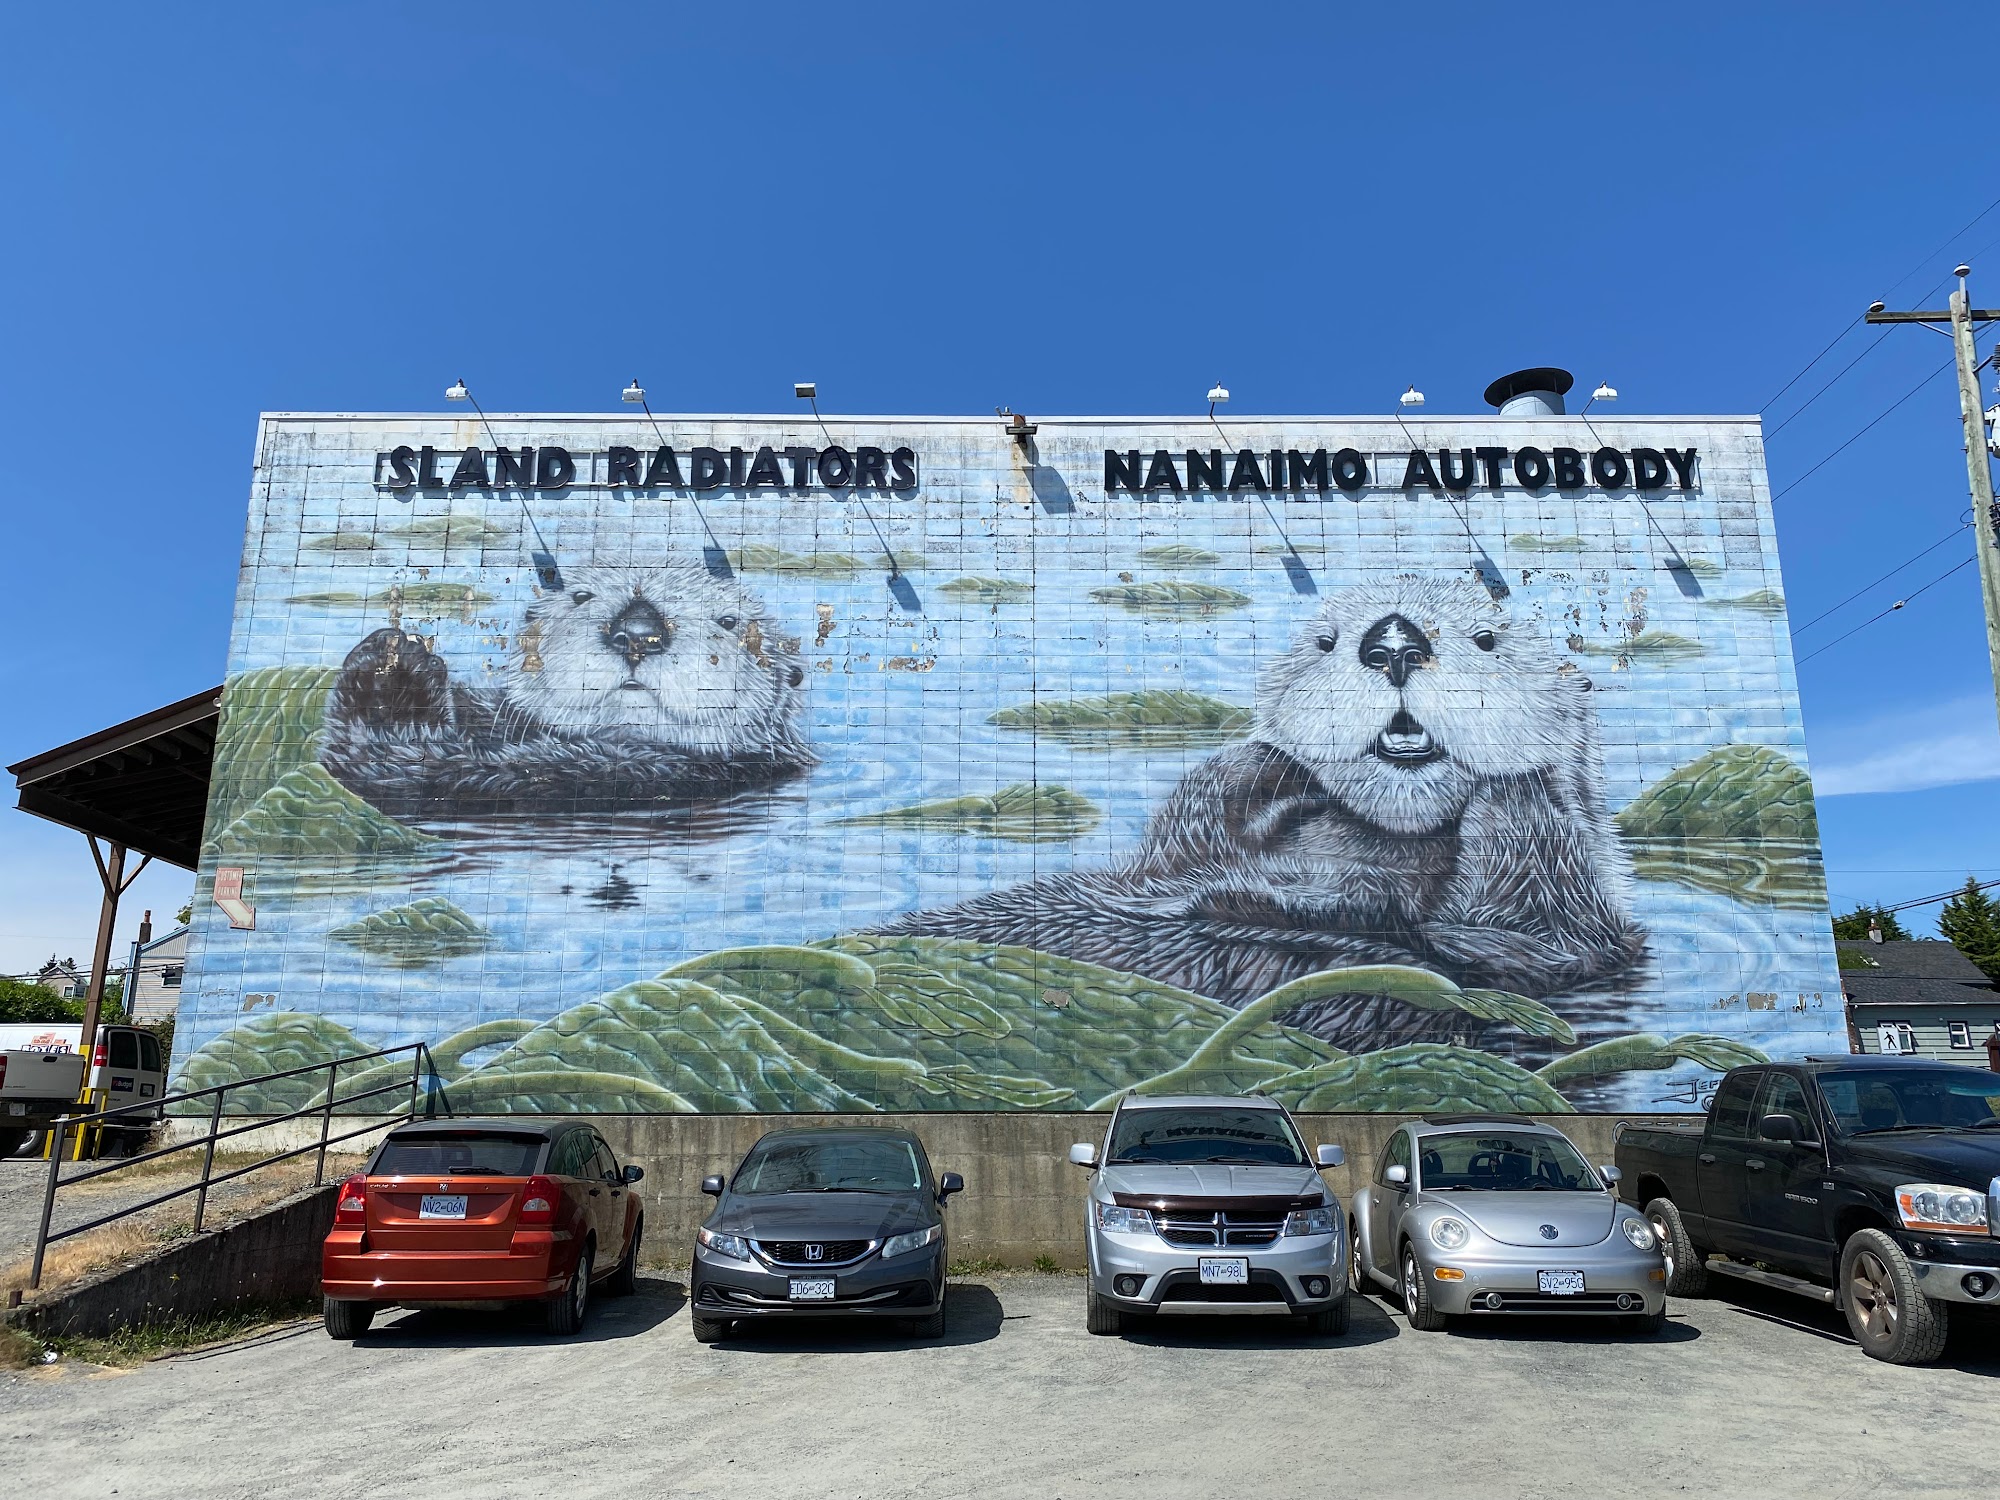 Island Radiators - Nanaimo